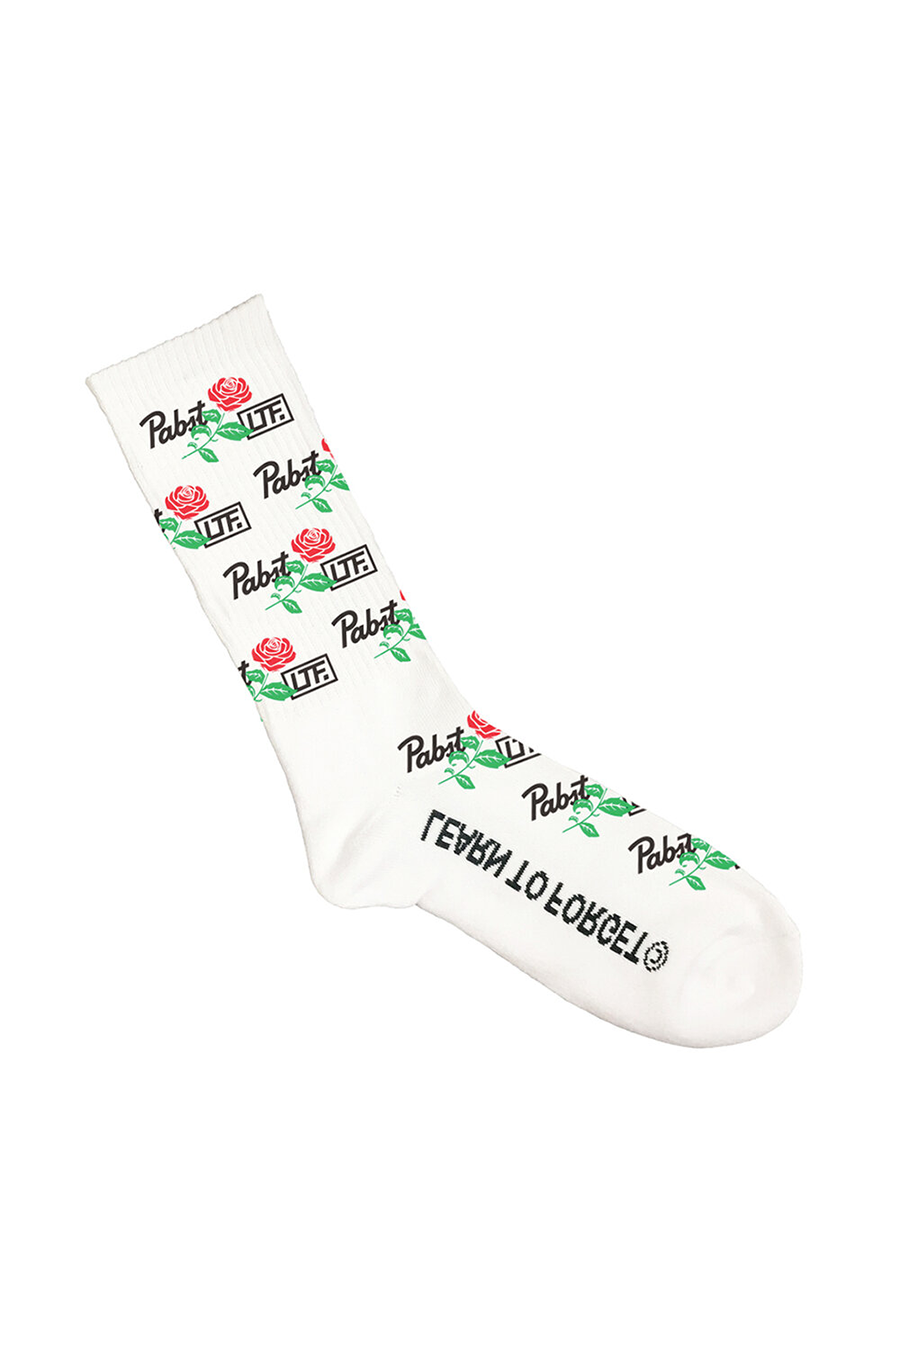 Pabst Rose Socks | White - Main Image Number 1 of 1